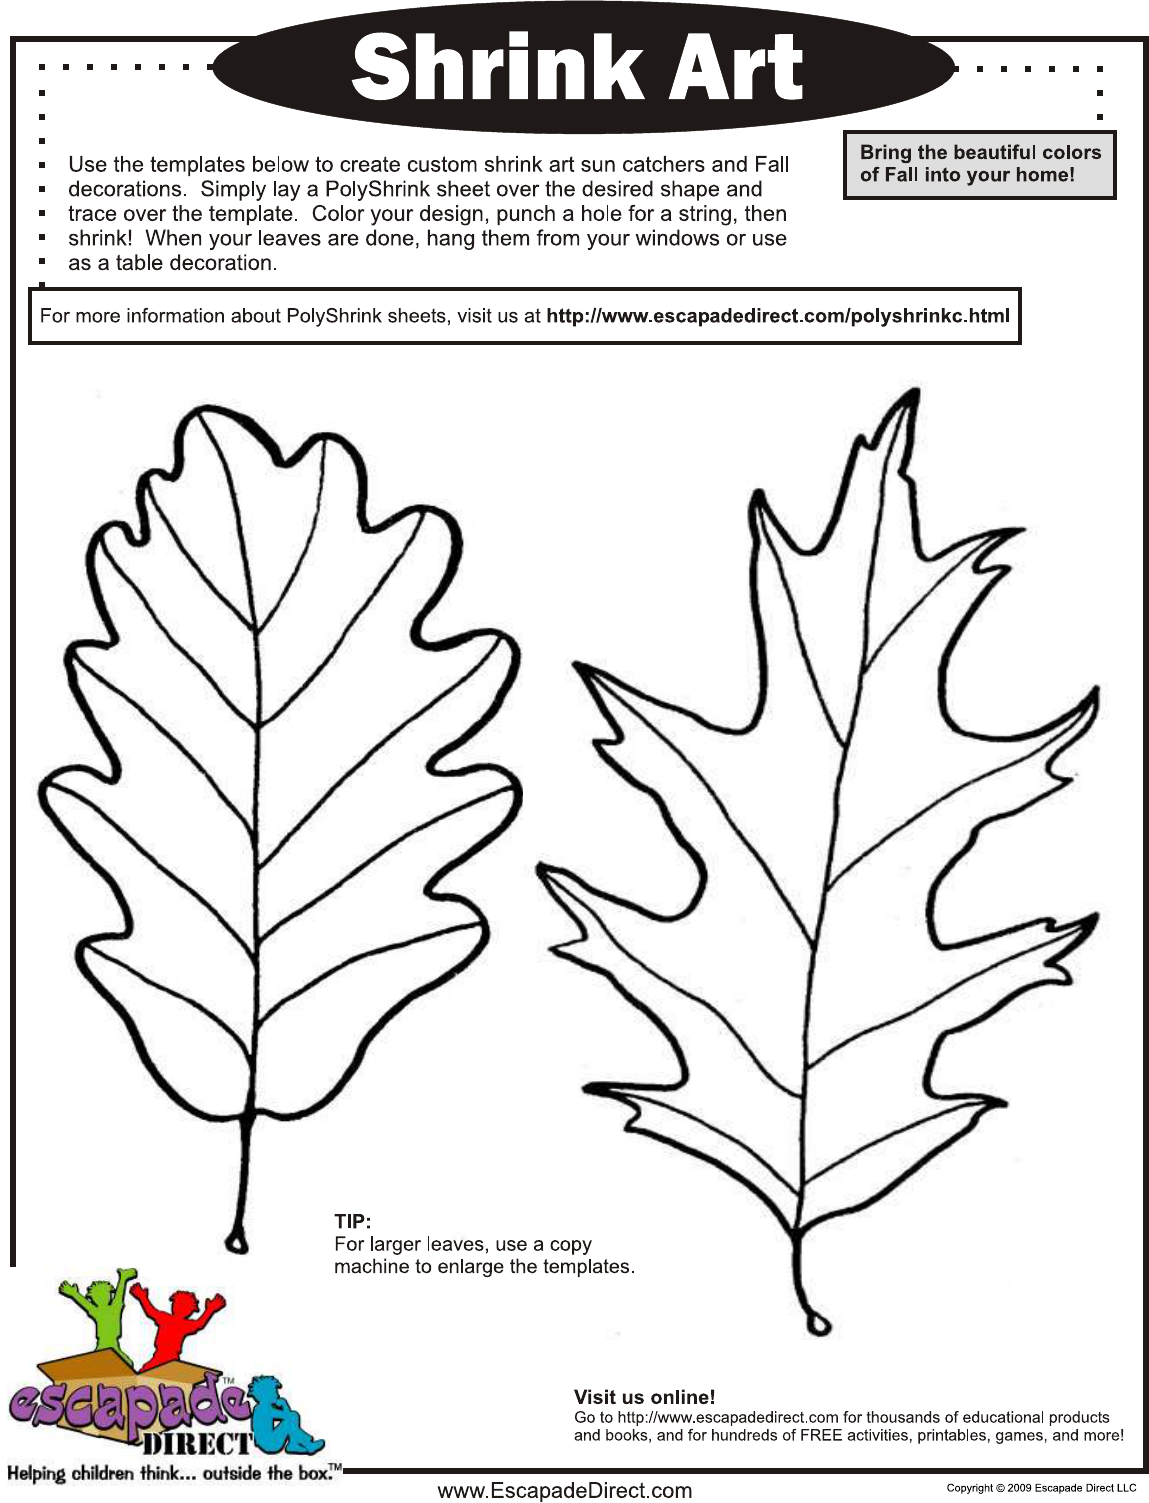 Free Leaf Template - PDF | 1323KB | 4 Page(s)